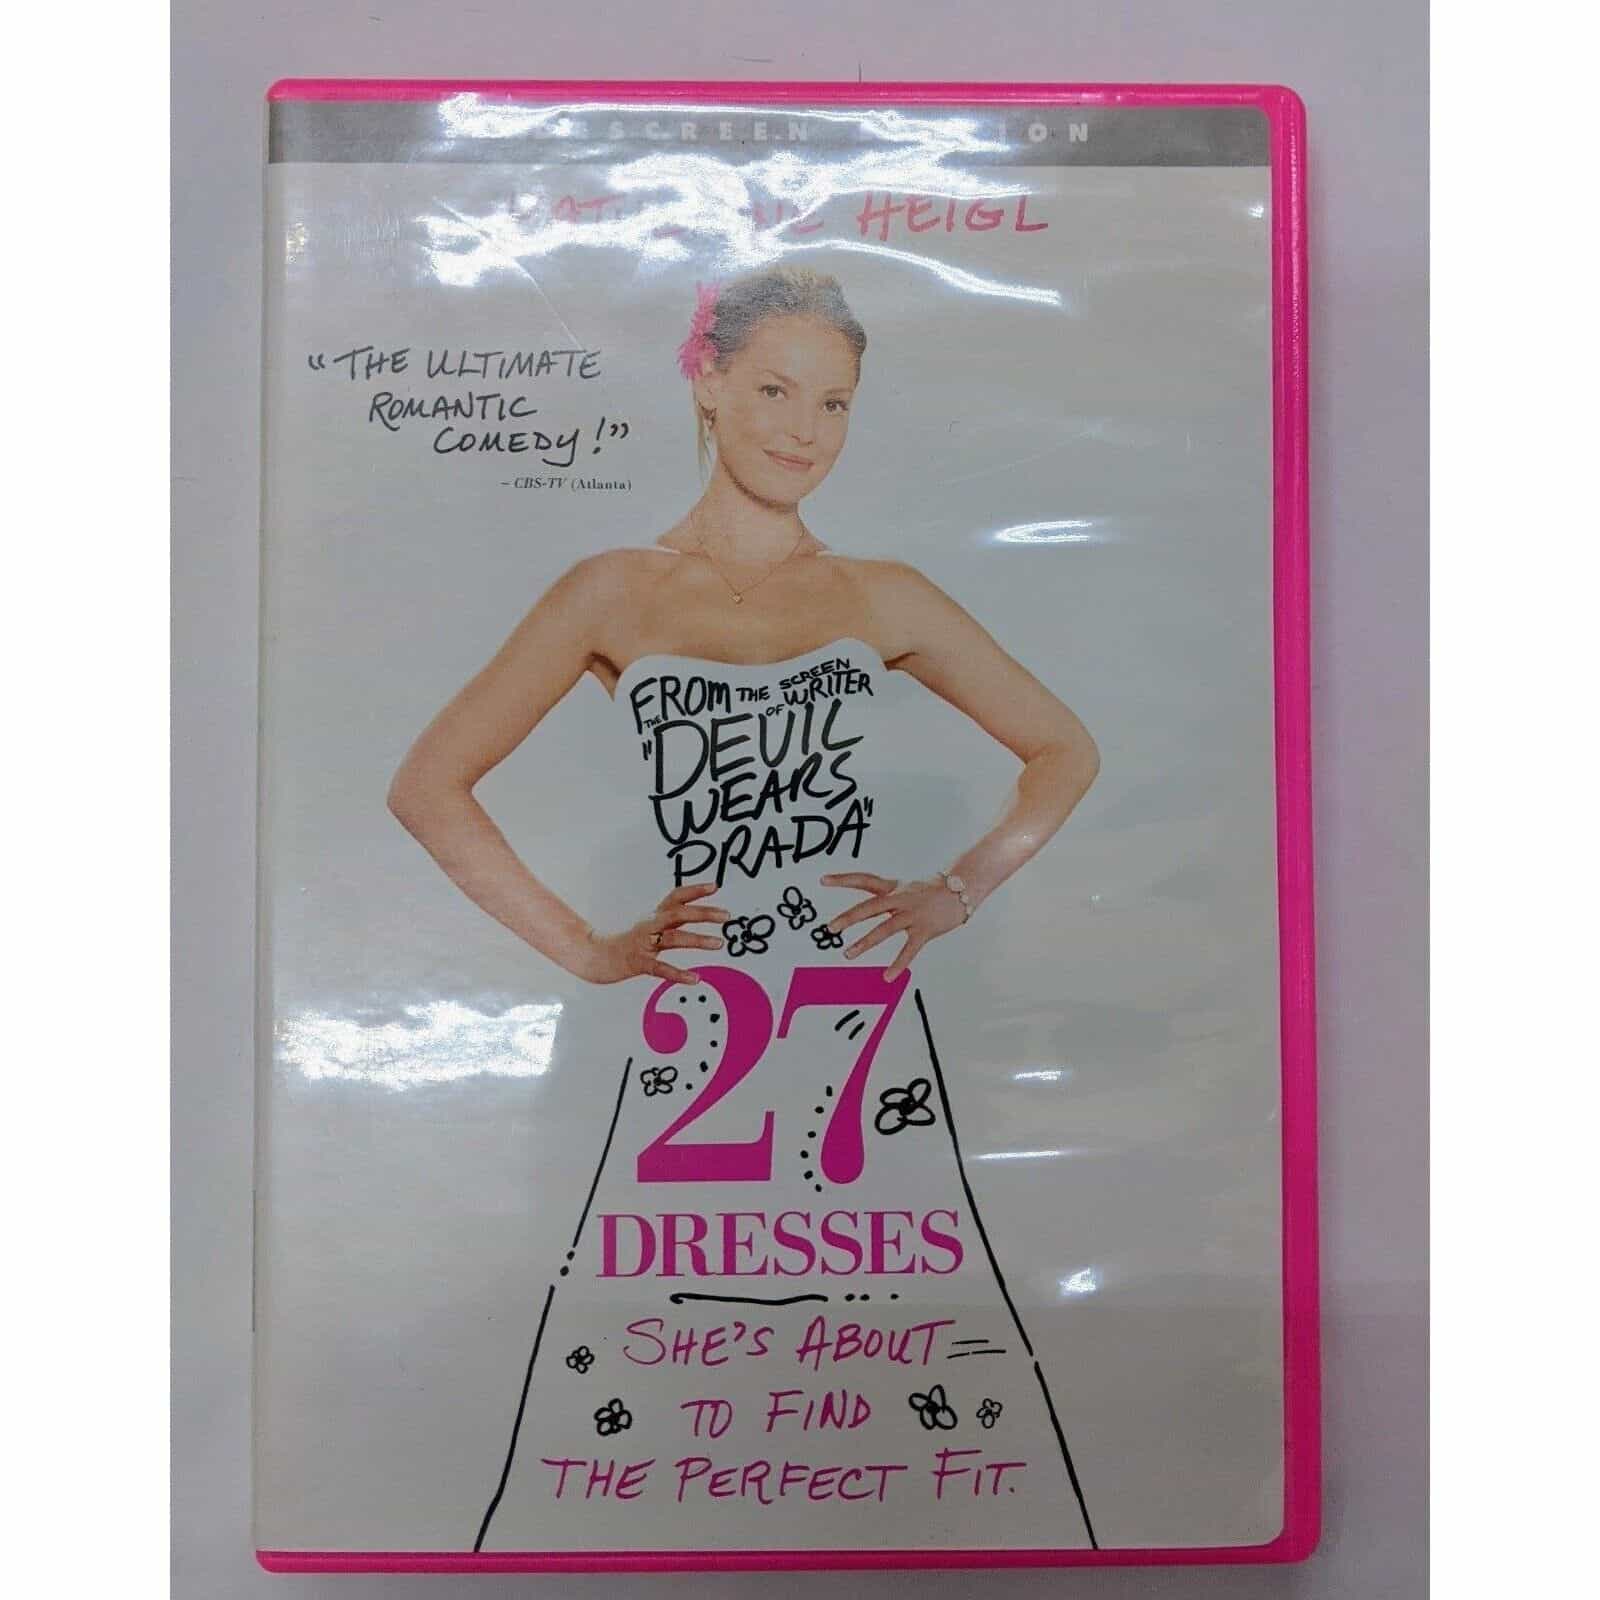 27 Dresses DVD movie